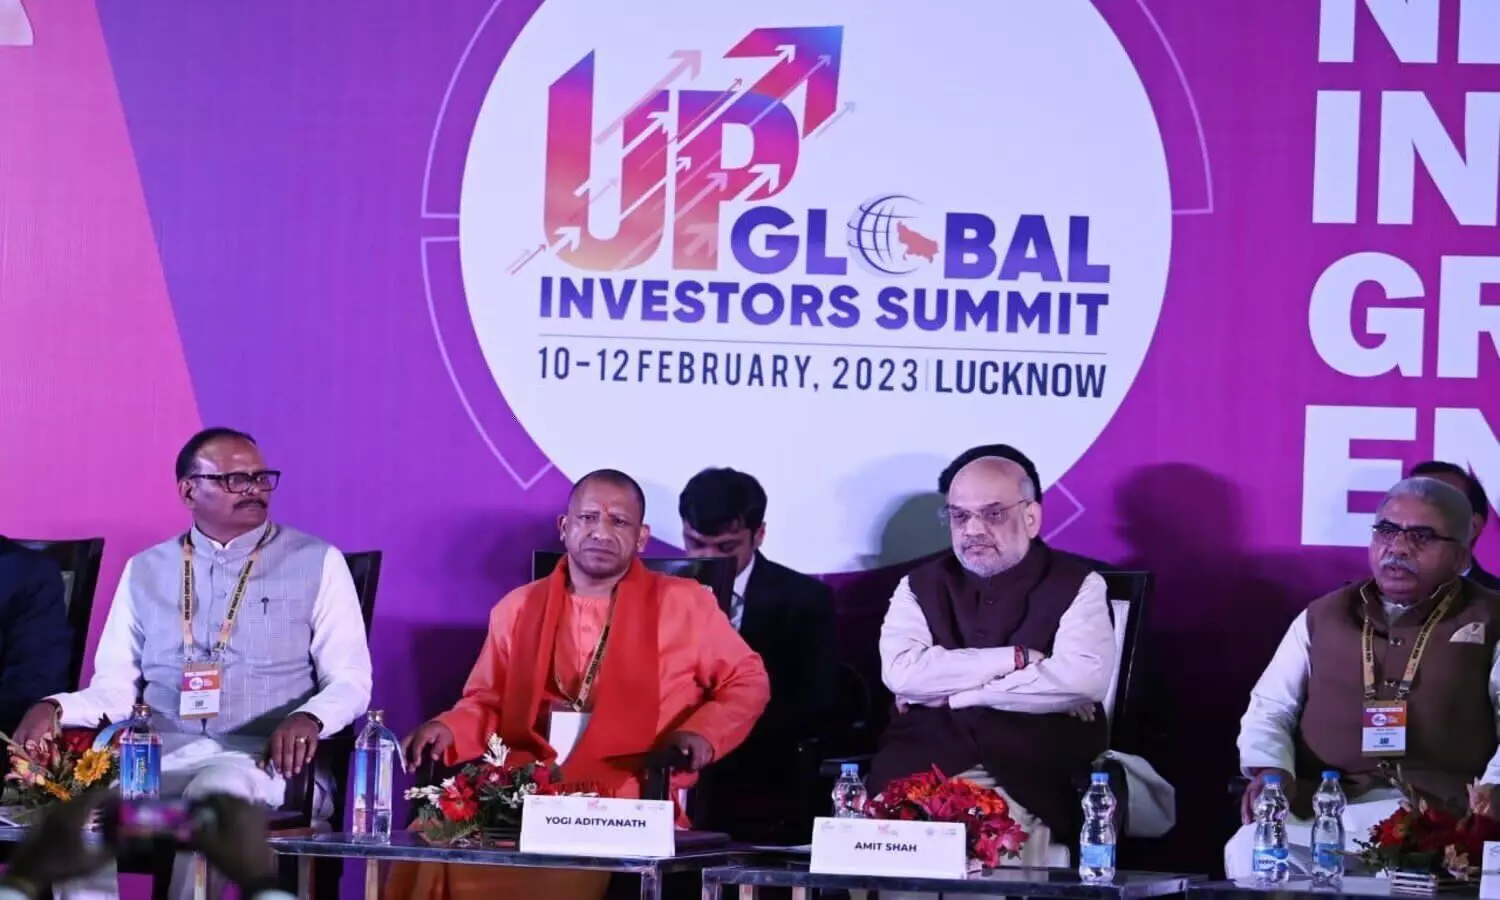 UP Global Investors Summit 2023